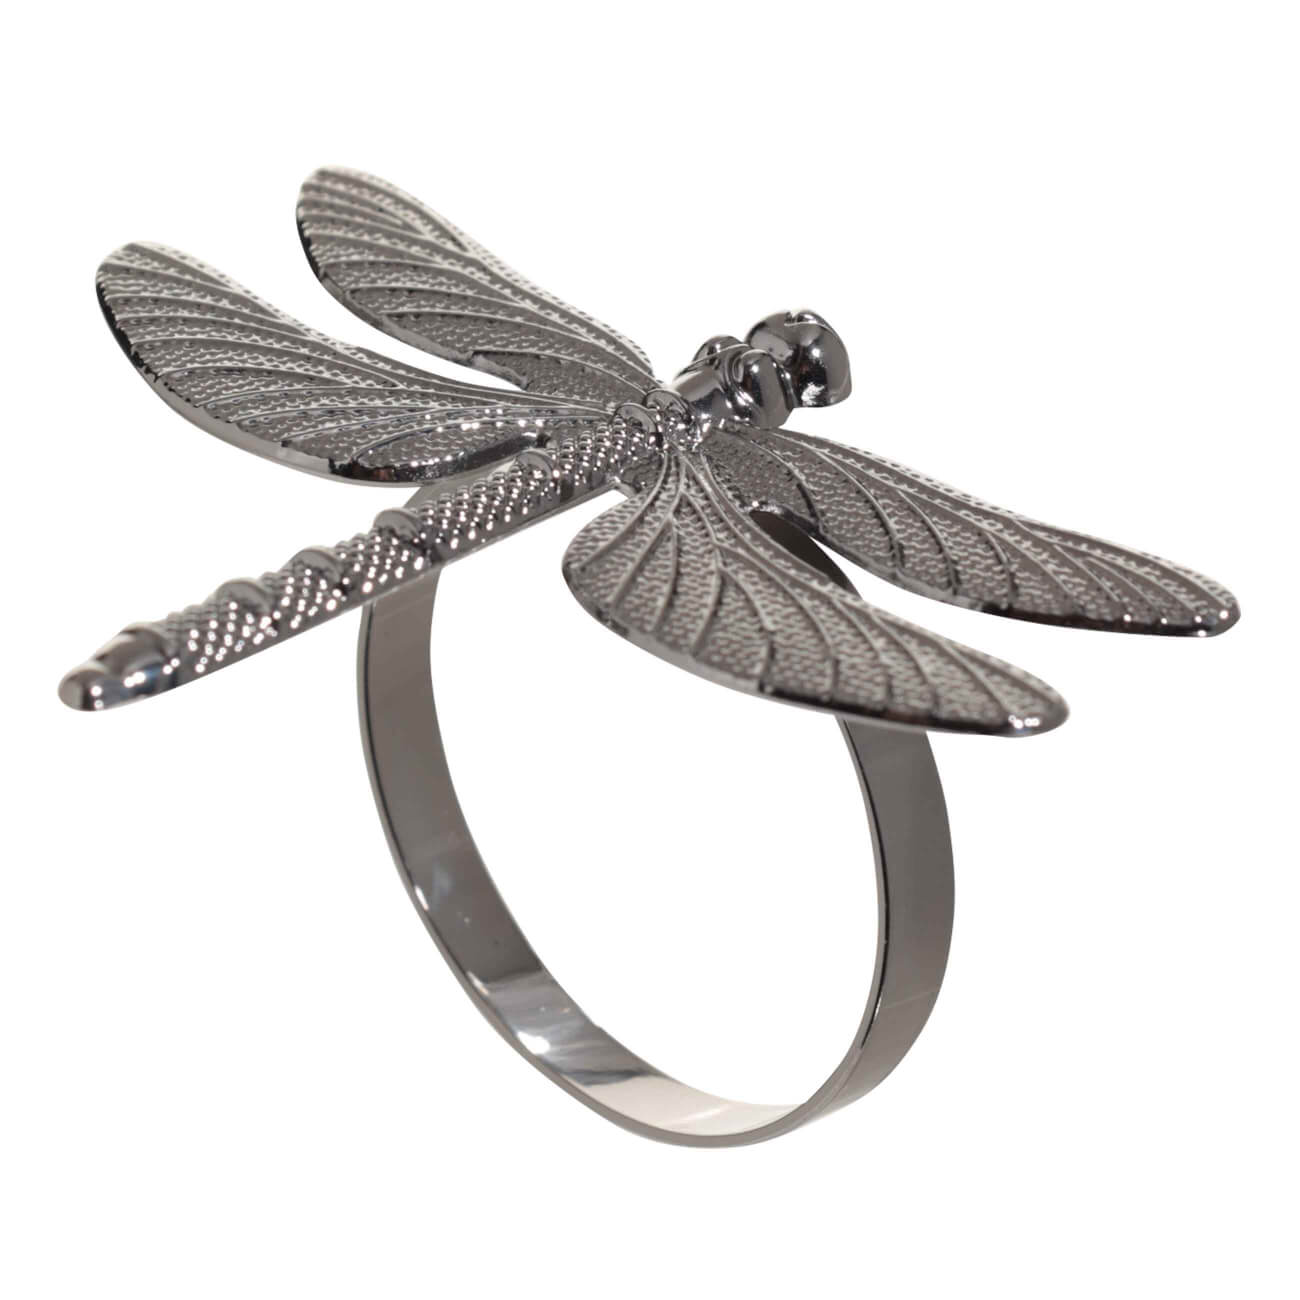 Кольцо для салфеток, 7 см, металл, черное, Стрекоза, Dragonfly кольцо